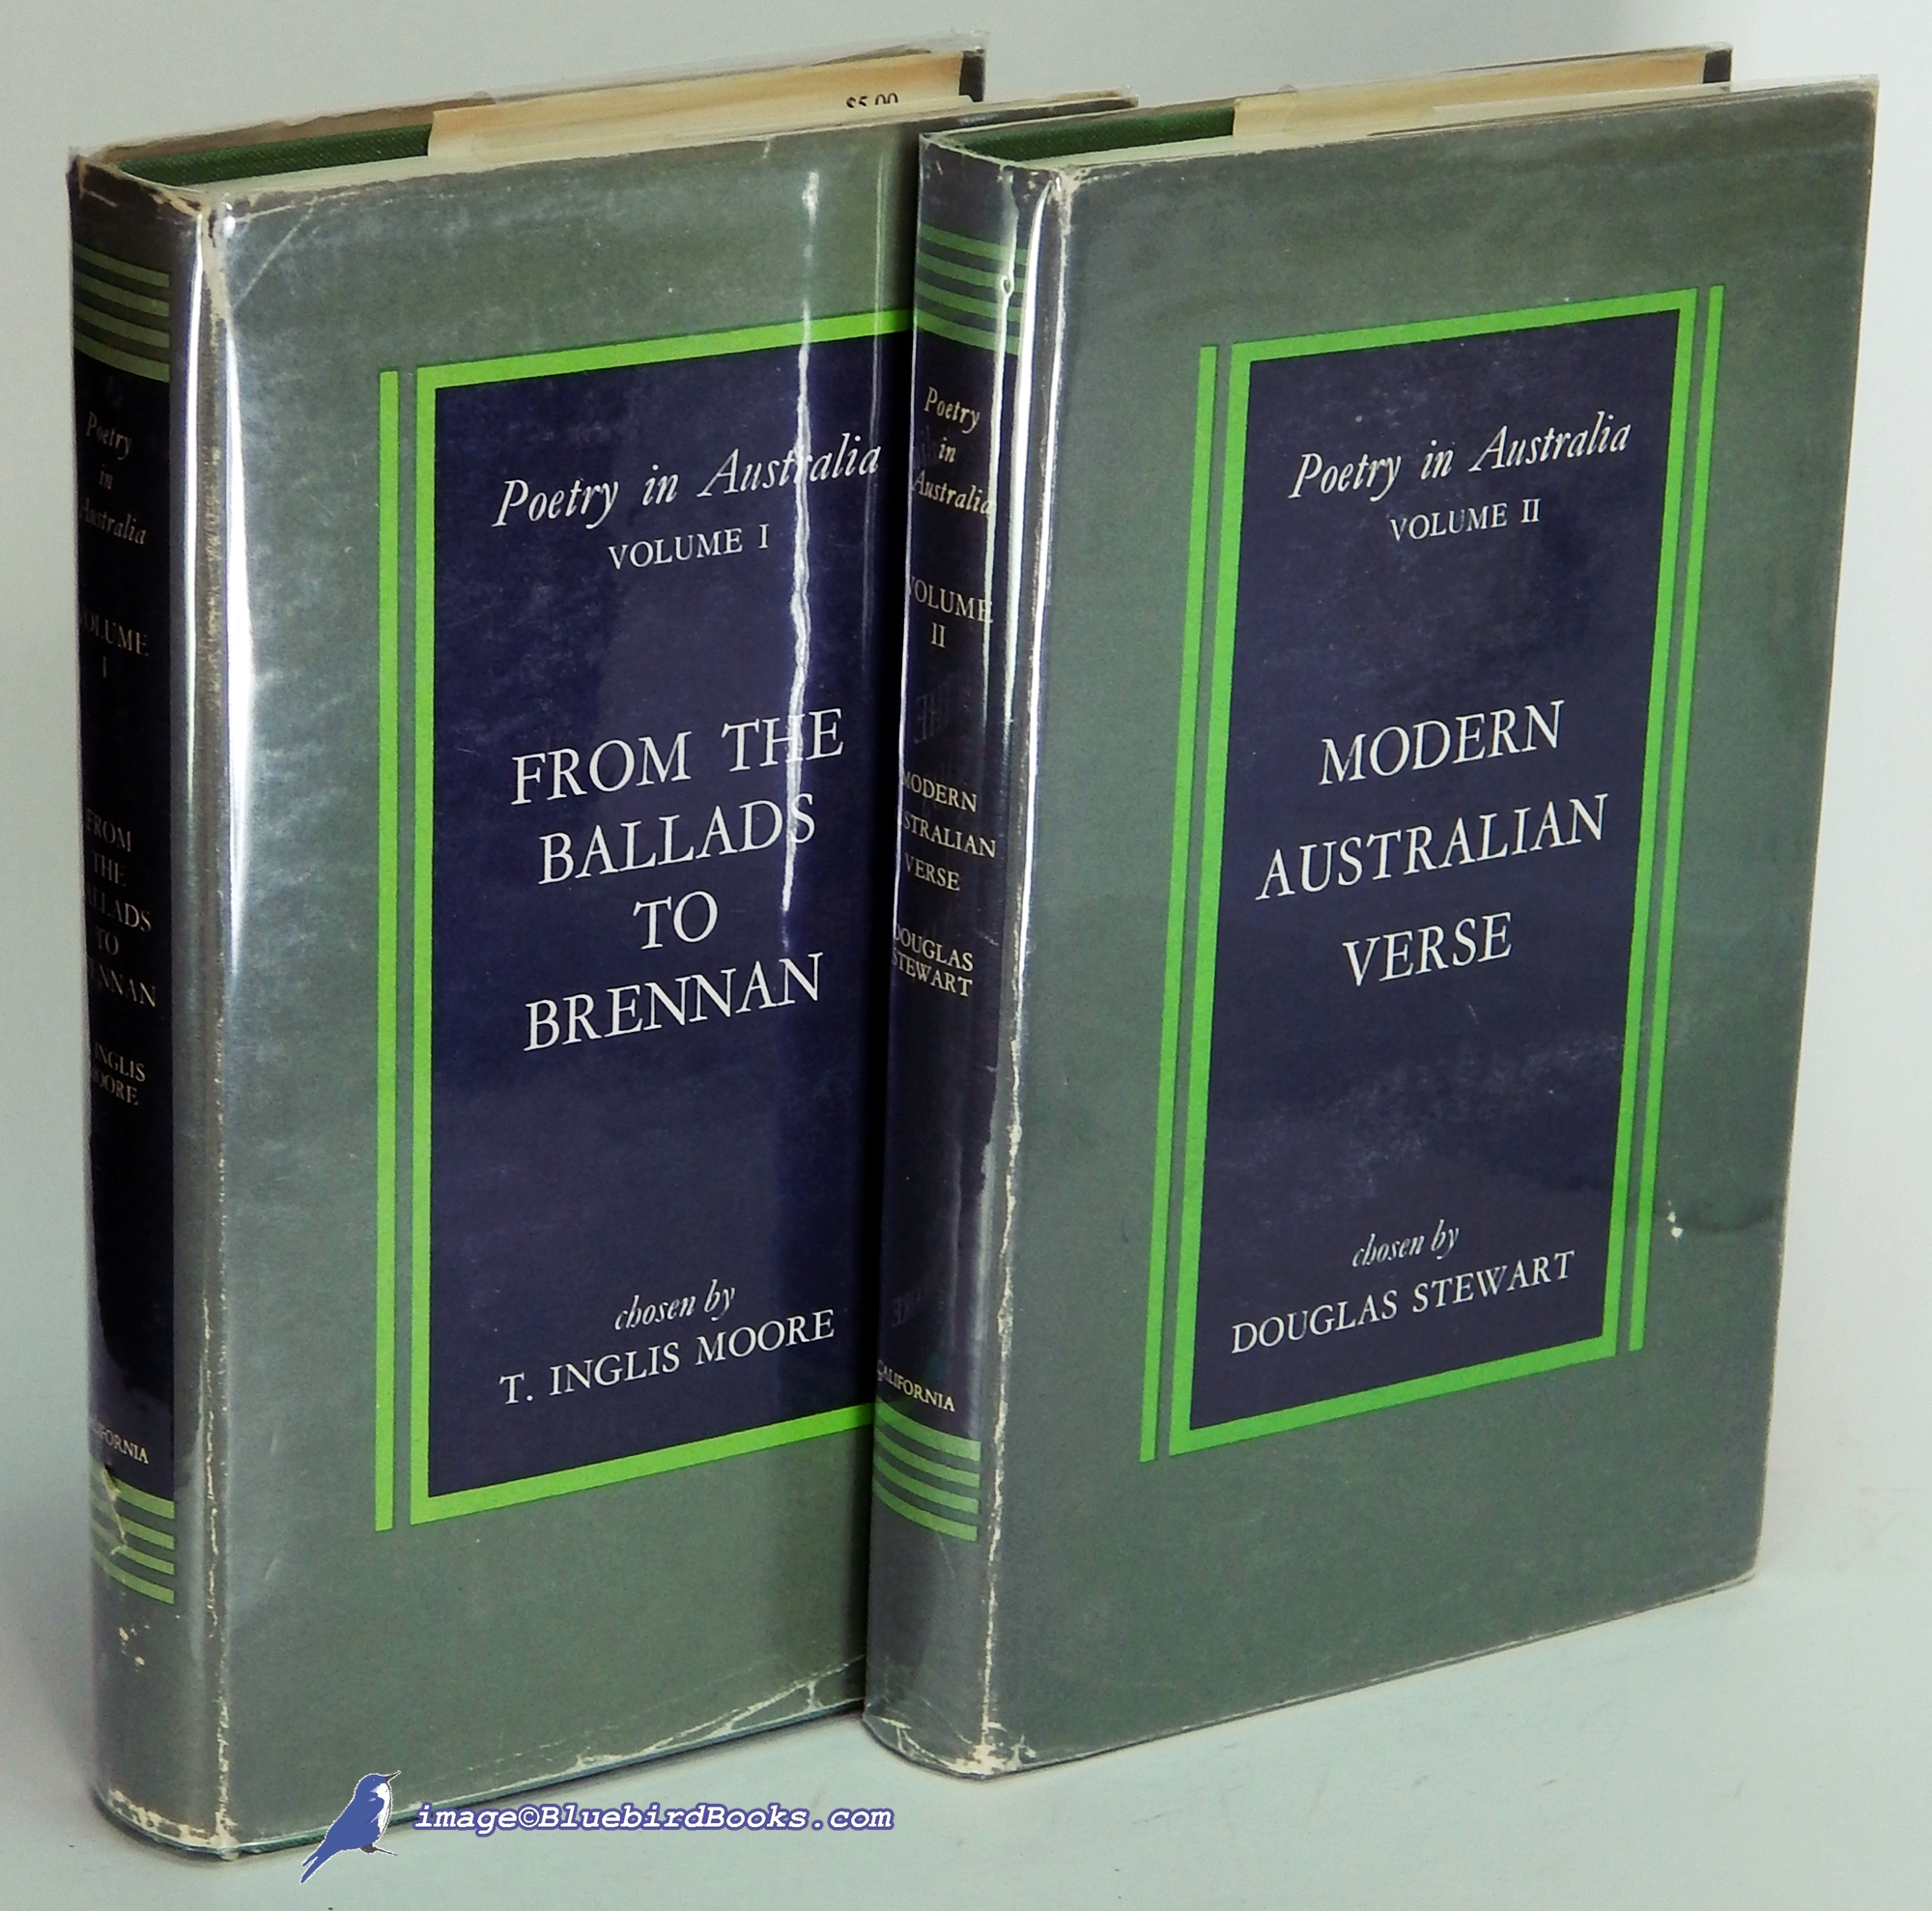 MOORE, T. INGLIS (SELECTOR, V. I); STEWART, DOUGLAS (SELECTOR, V. II) - Poetry in Australia, in Two Volumes: Vol. I from the Ballads to Brennan; Vol. II Modern Australian Verse